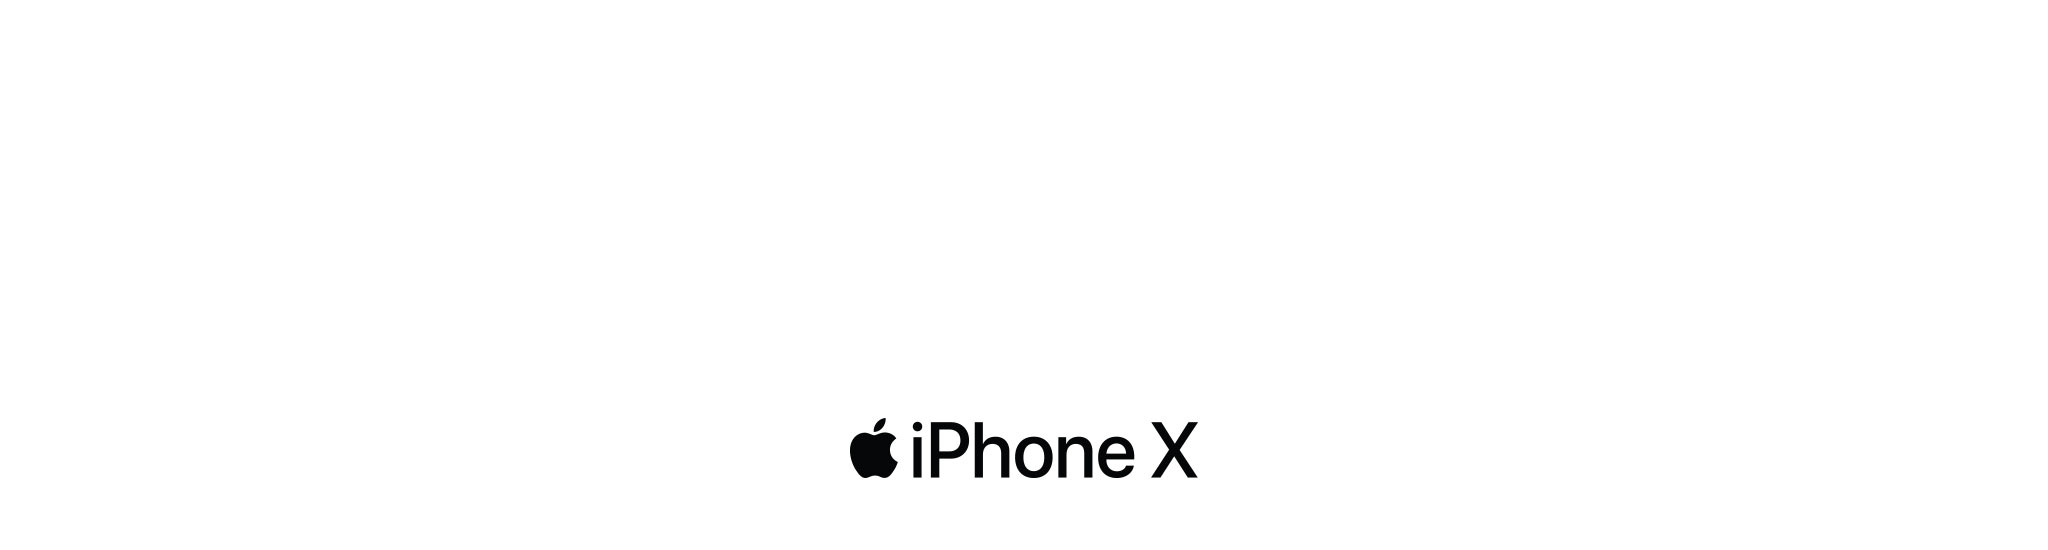 Iphonex Logo - iPhone X